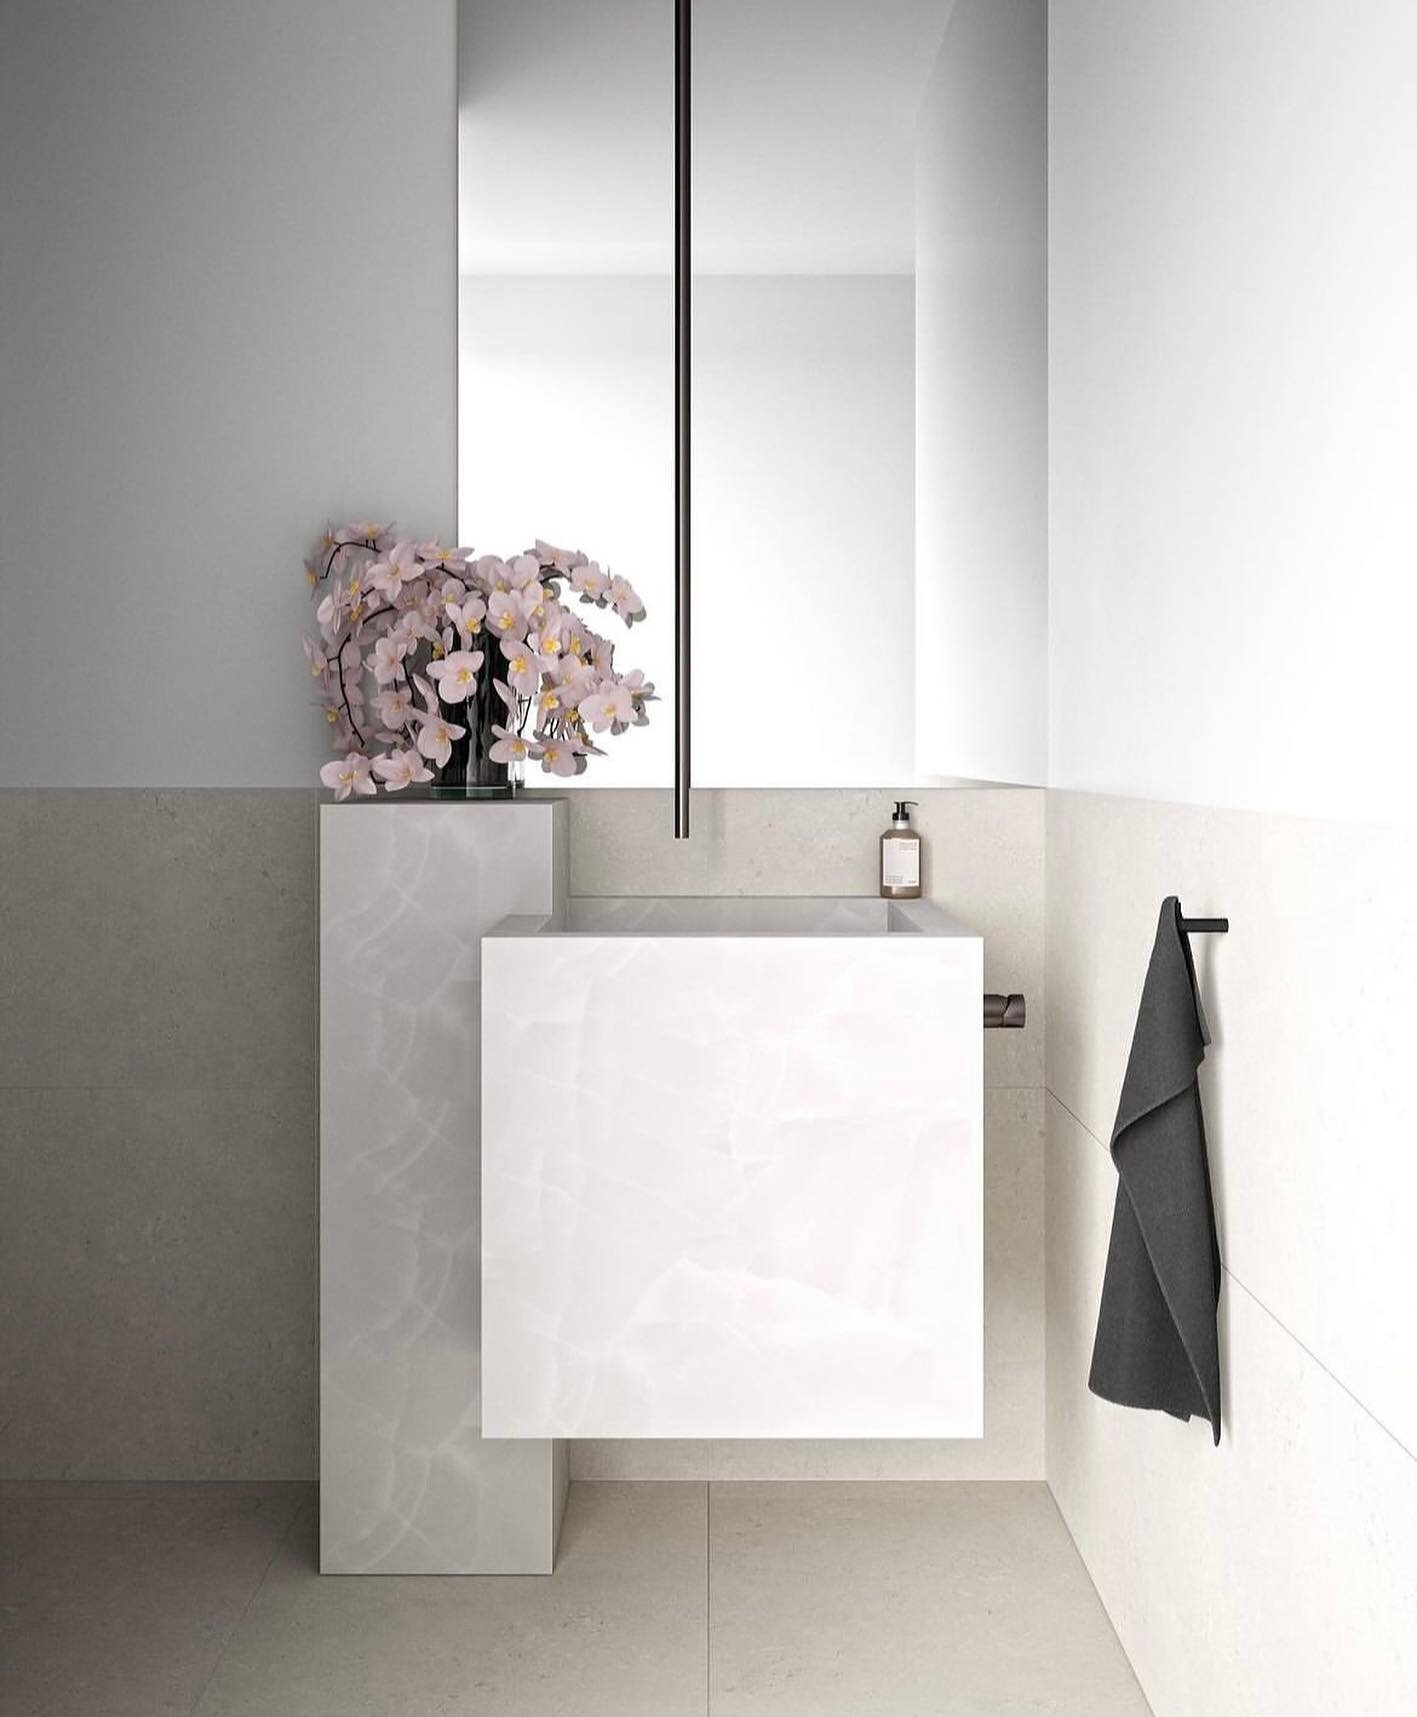 [ Hampton Ltd.
.
.
Develop @spyregroup 
Design @studio_brentlee 
Basin @aldini__ 
📸 @enceladus.studio 
.
. 
#onyx #home #homedecor #basin #skirting #pedestal #powder #powderroom #bathroom #tub #vanity #lighting #sunroof #interiordesign #interior #ba